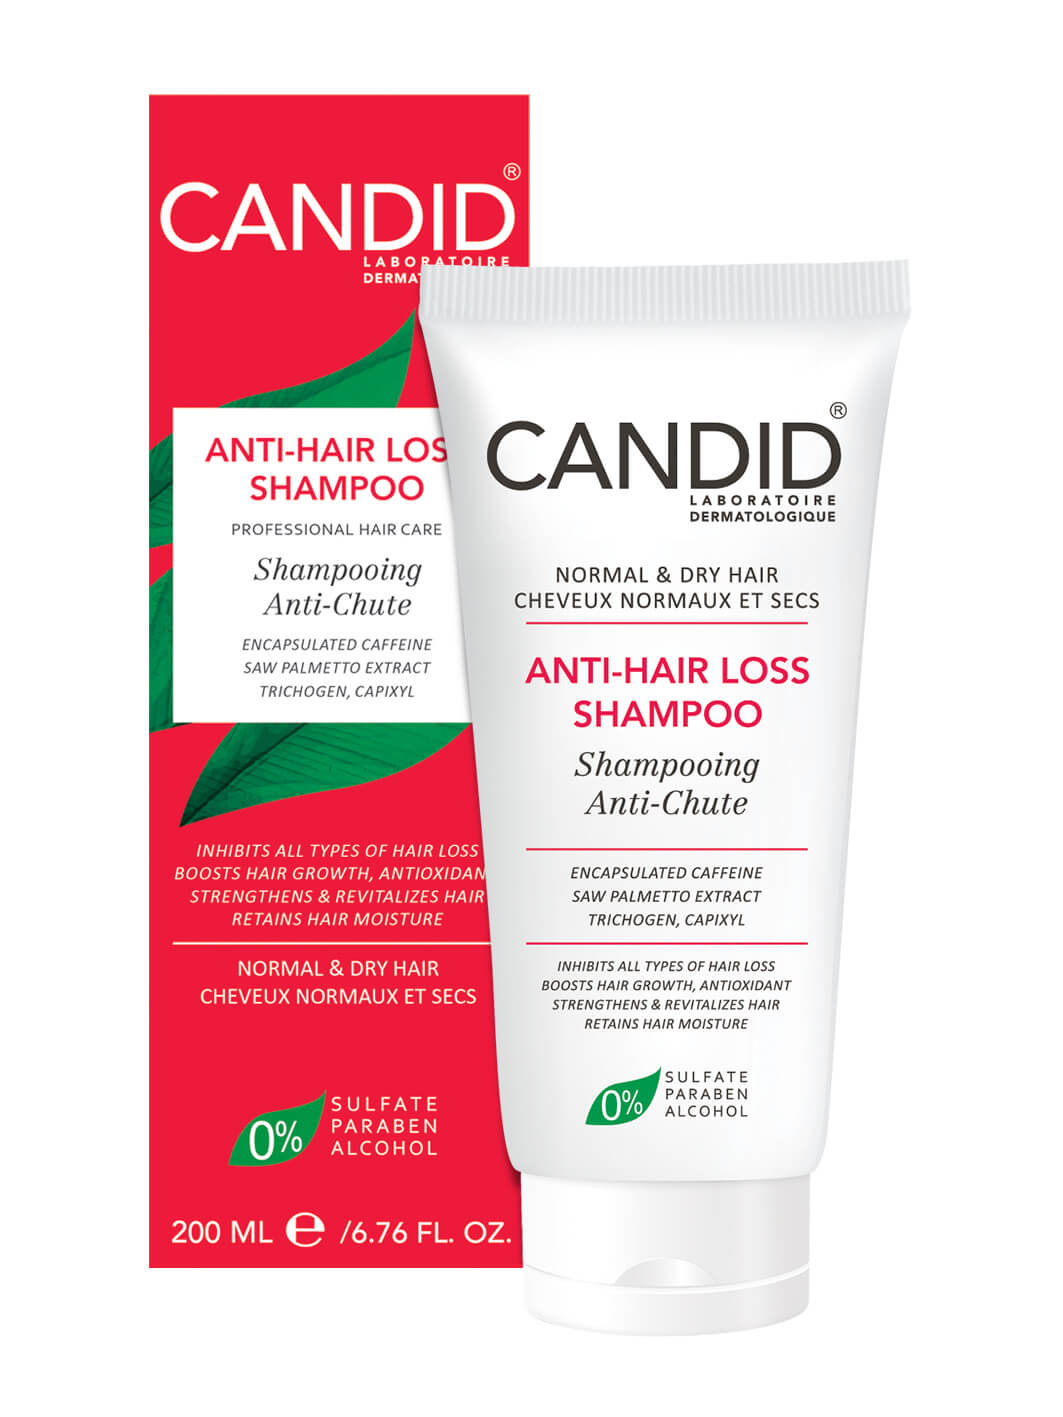  Anti-Hair loss Shampoo For Normal and Dry Hair - شامپو ضدریزش و تقویت کننده موی نرمال و خشک